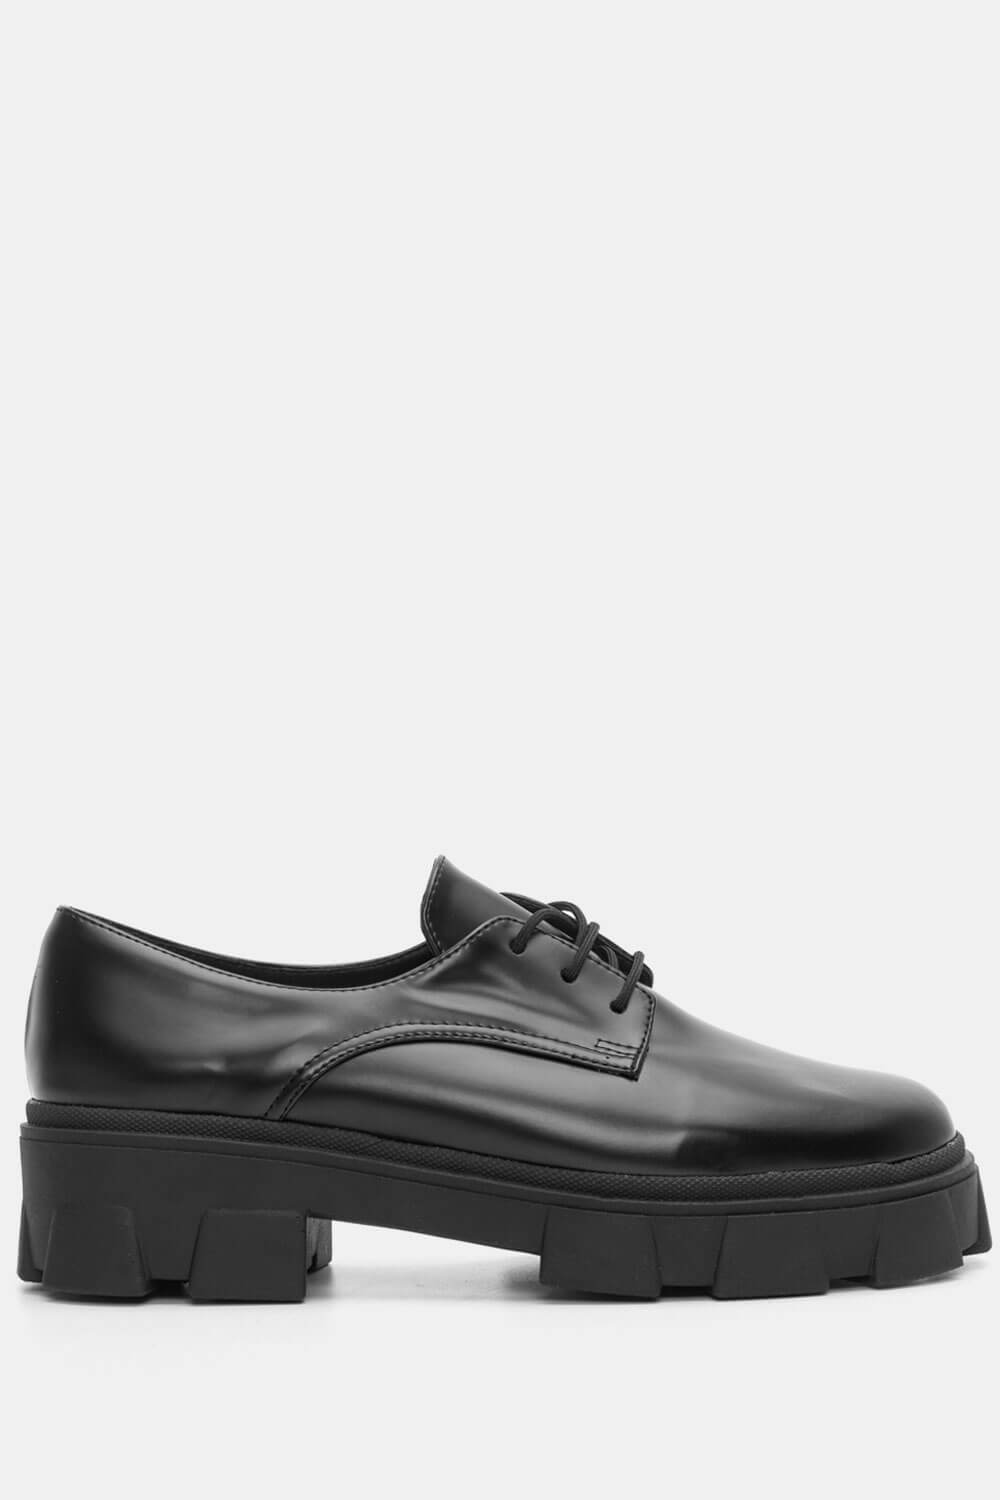 LUIGI DESIGN - Δετά Παπούτσια με Τρακτερωτή Σόλα - Μαύρο ΠΑΠΟΥΤΣΙΑ > Δετά Παπούτσια